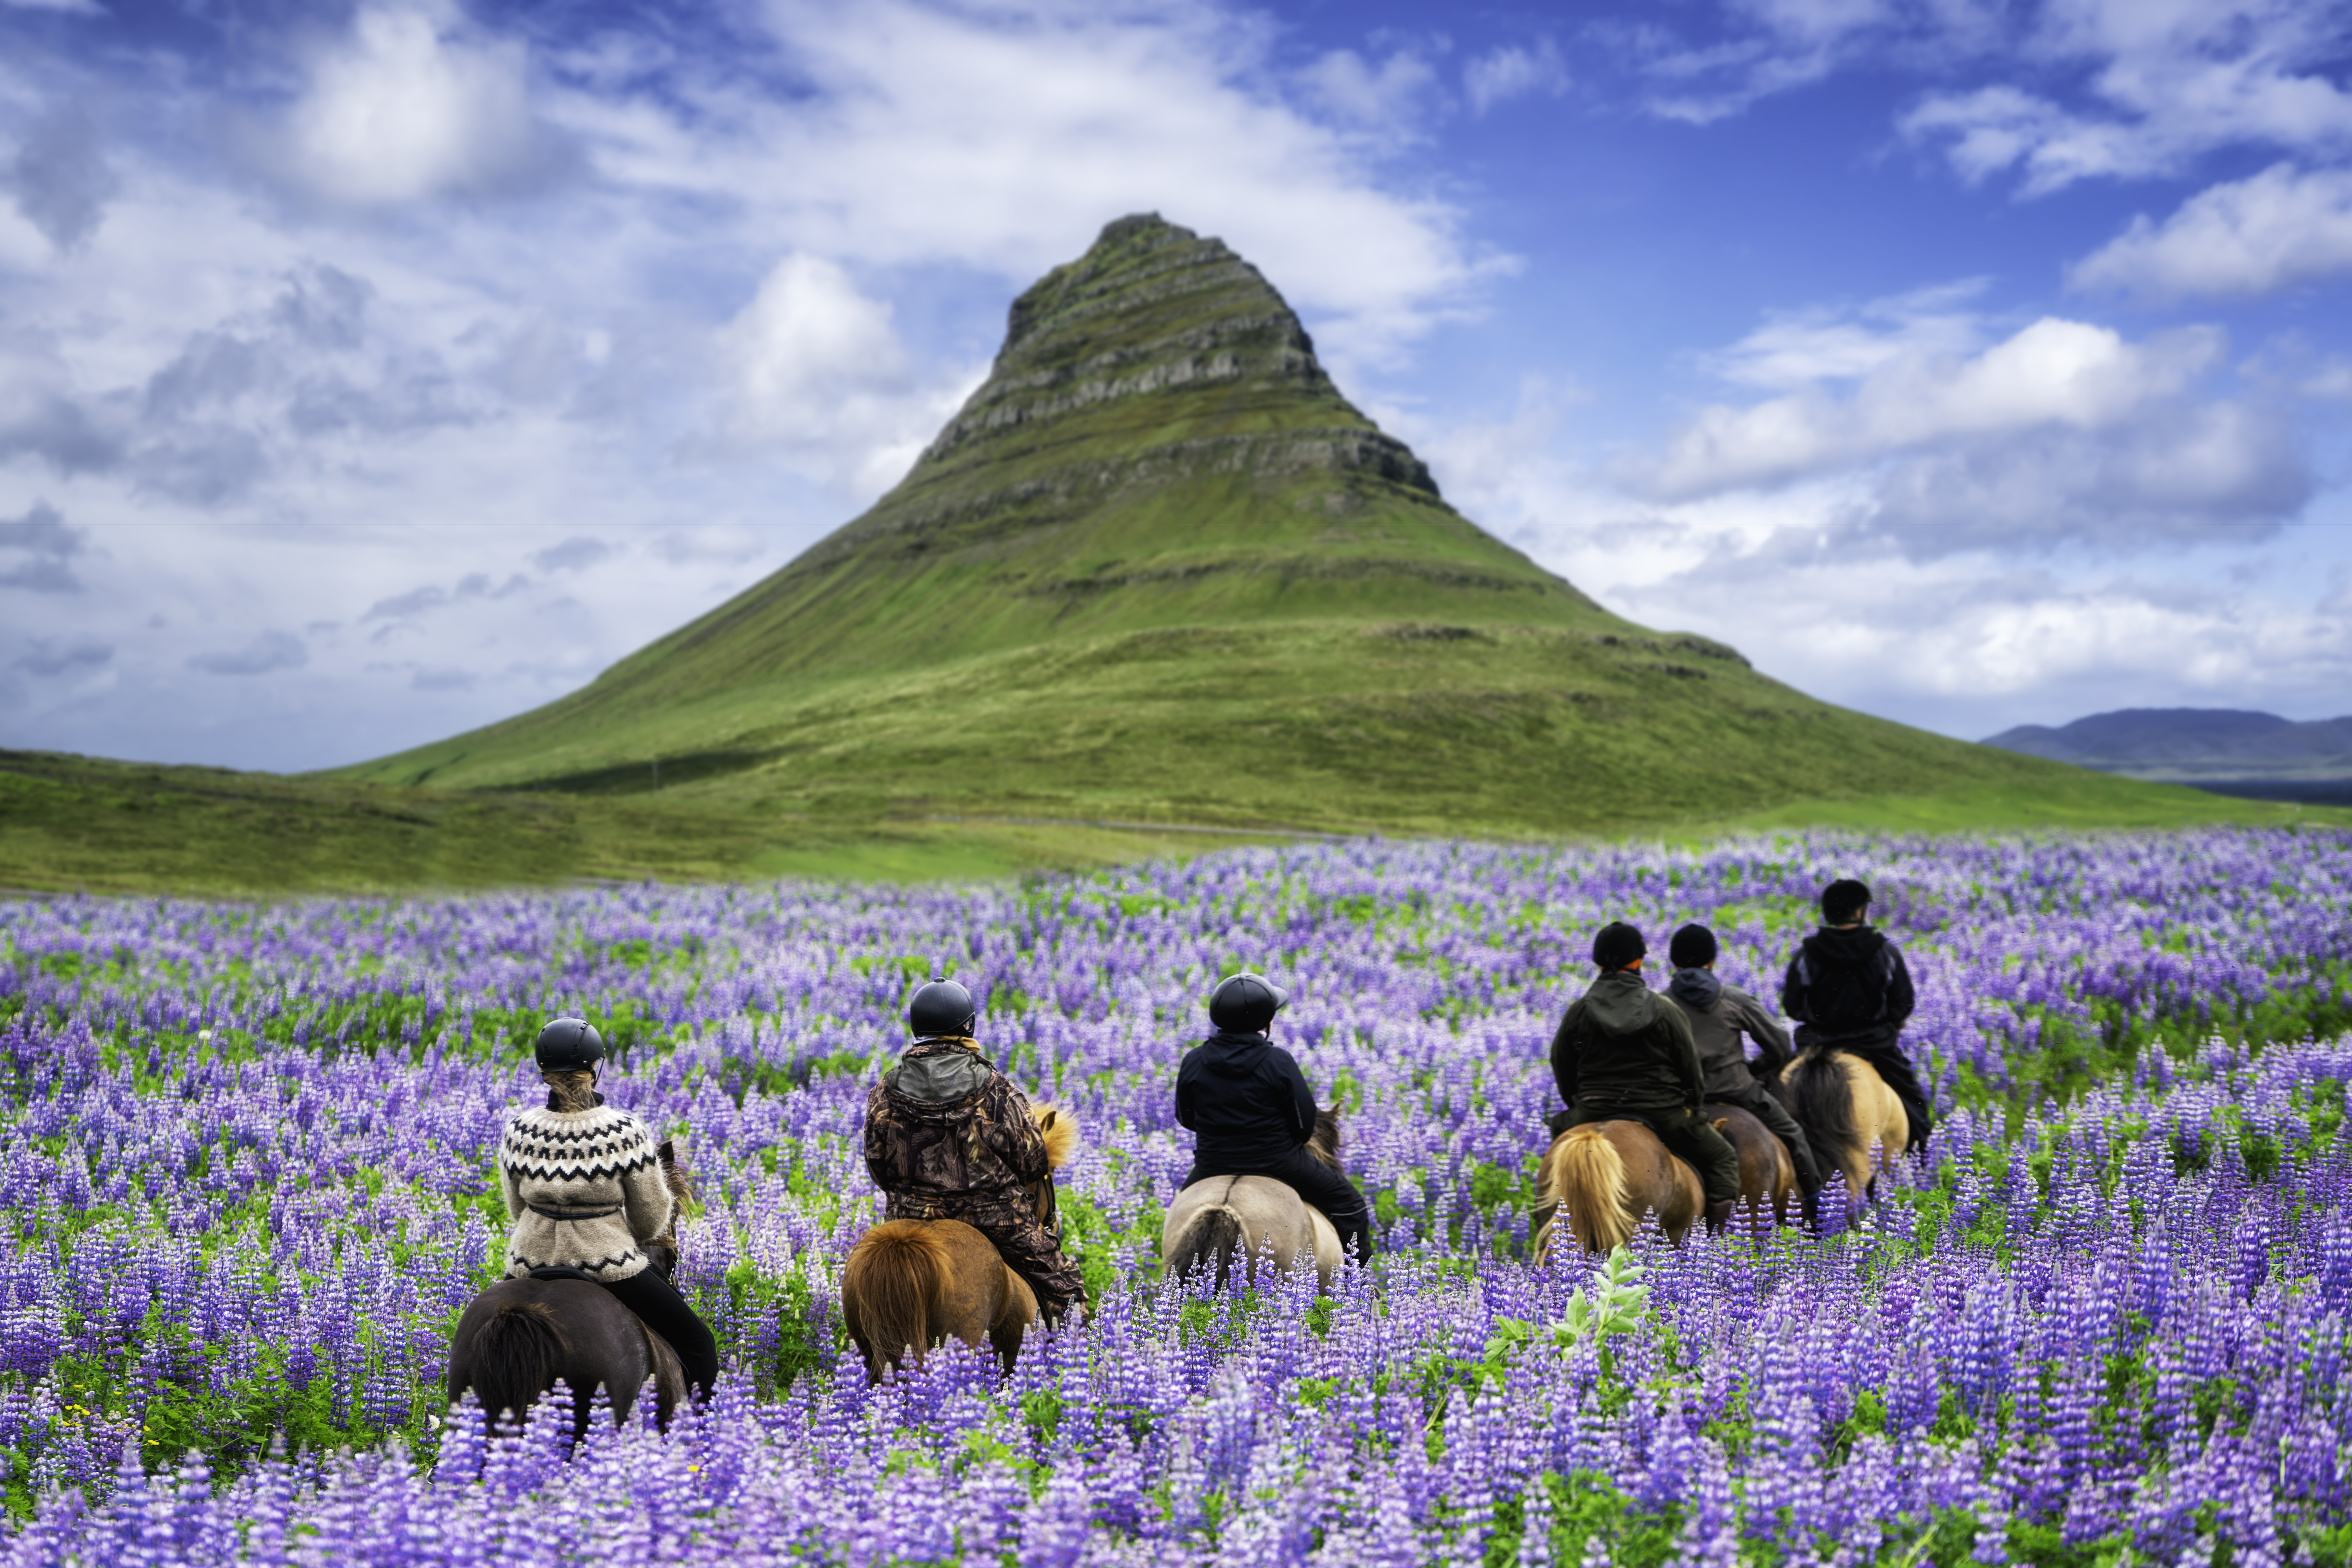 Riders in a field of purple flowers in Iceland